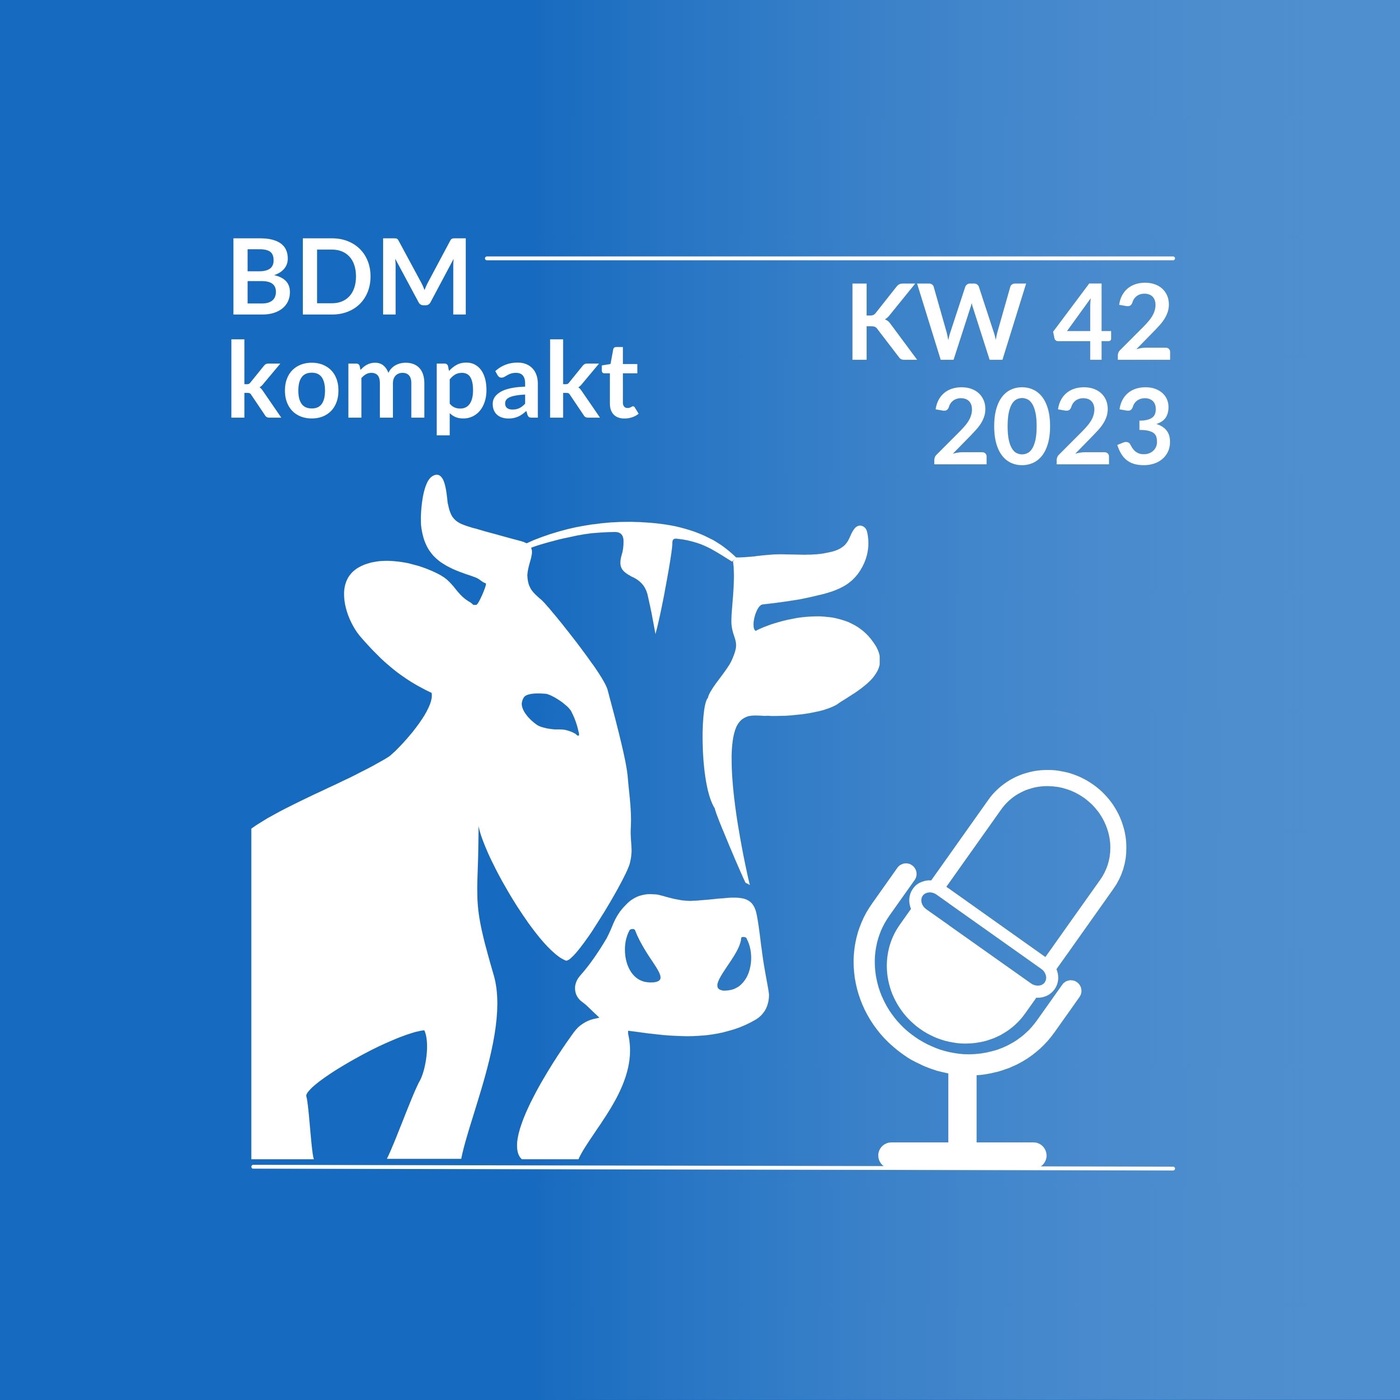 BDM kompakt KW 42/2023